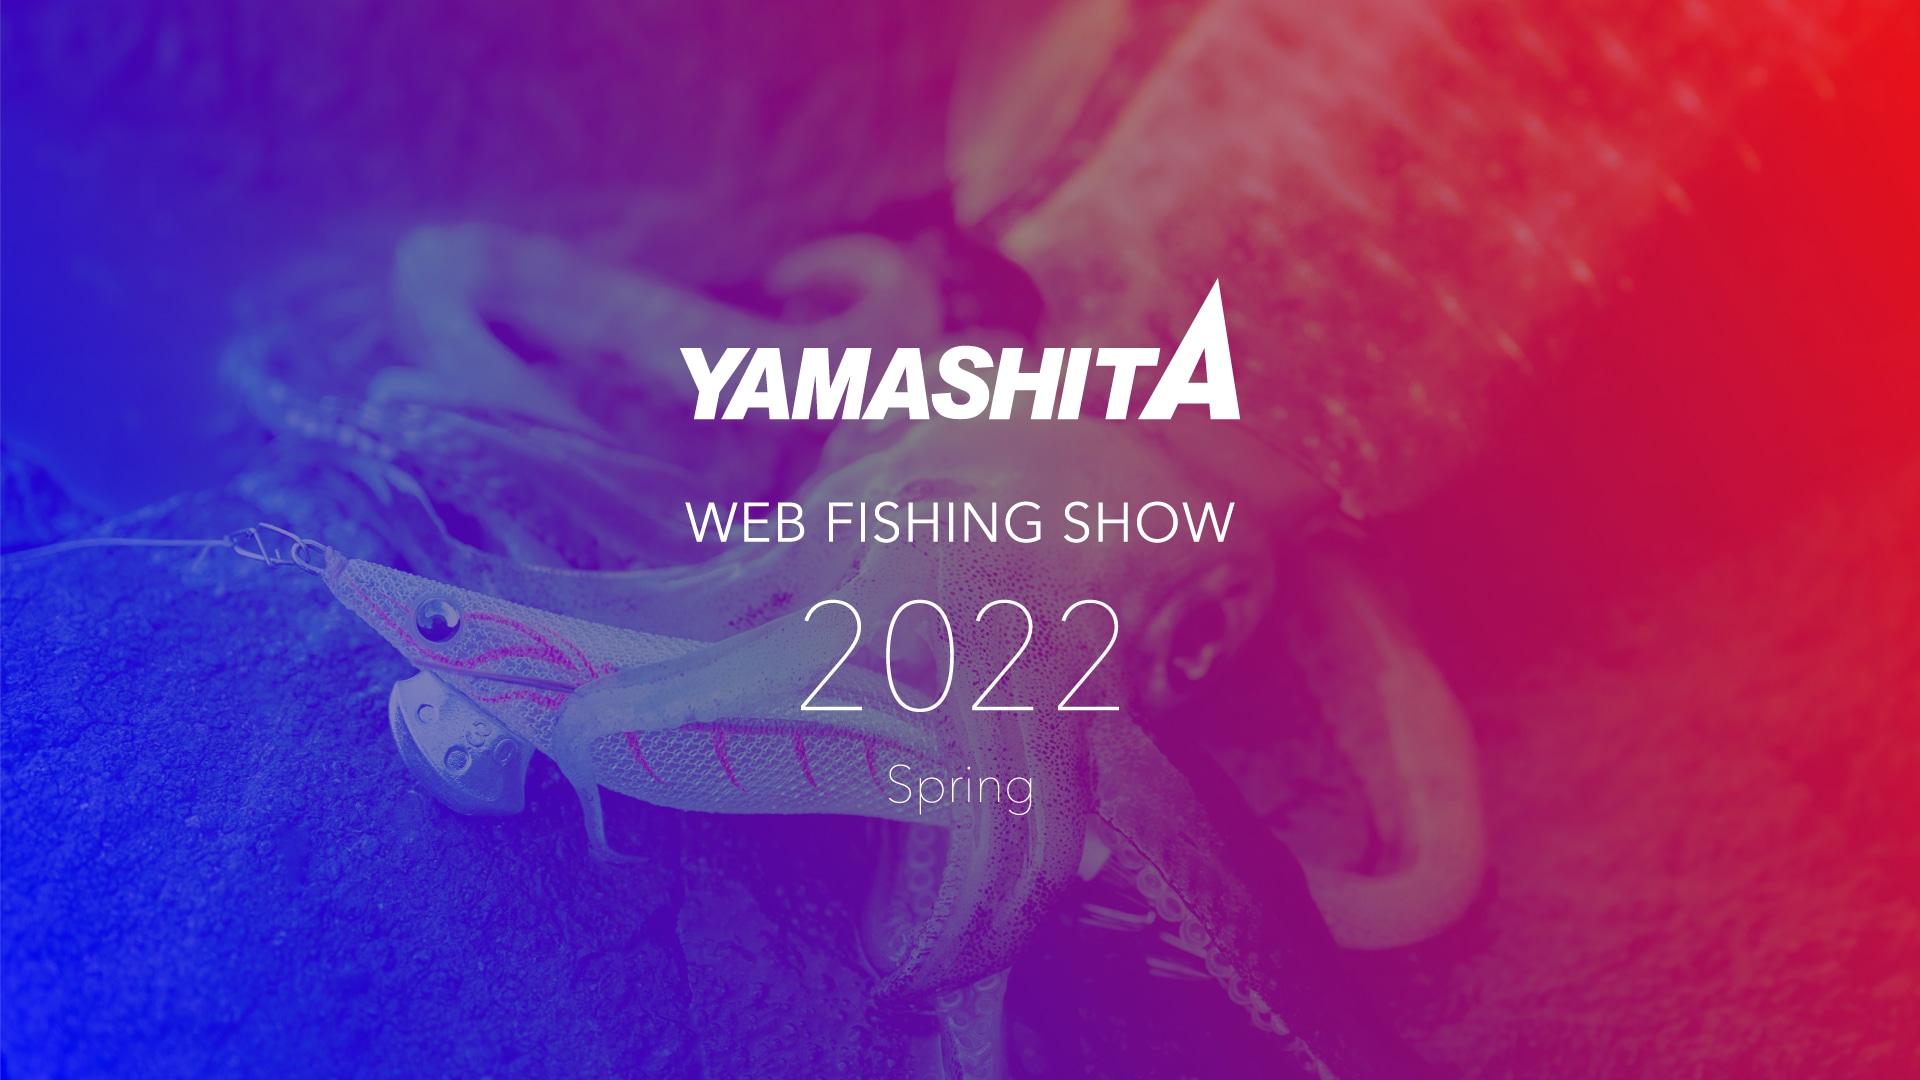 YAMASHITA WEB FISHING SHOW 2022 Spring